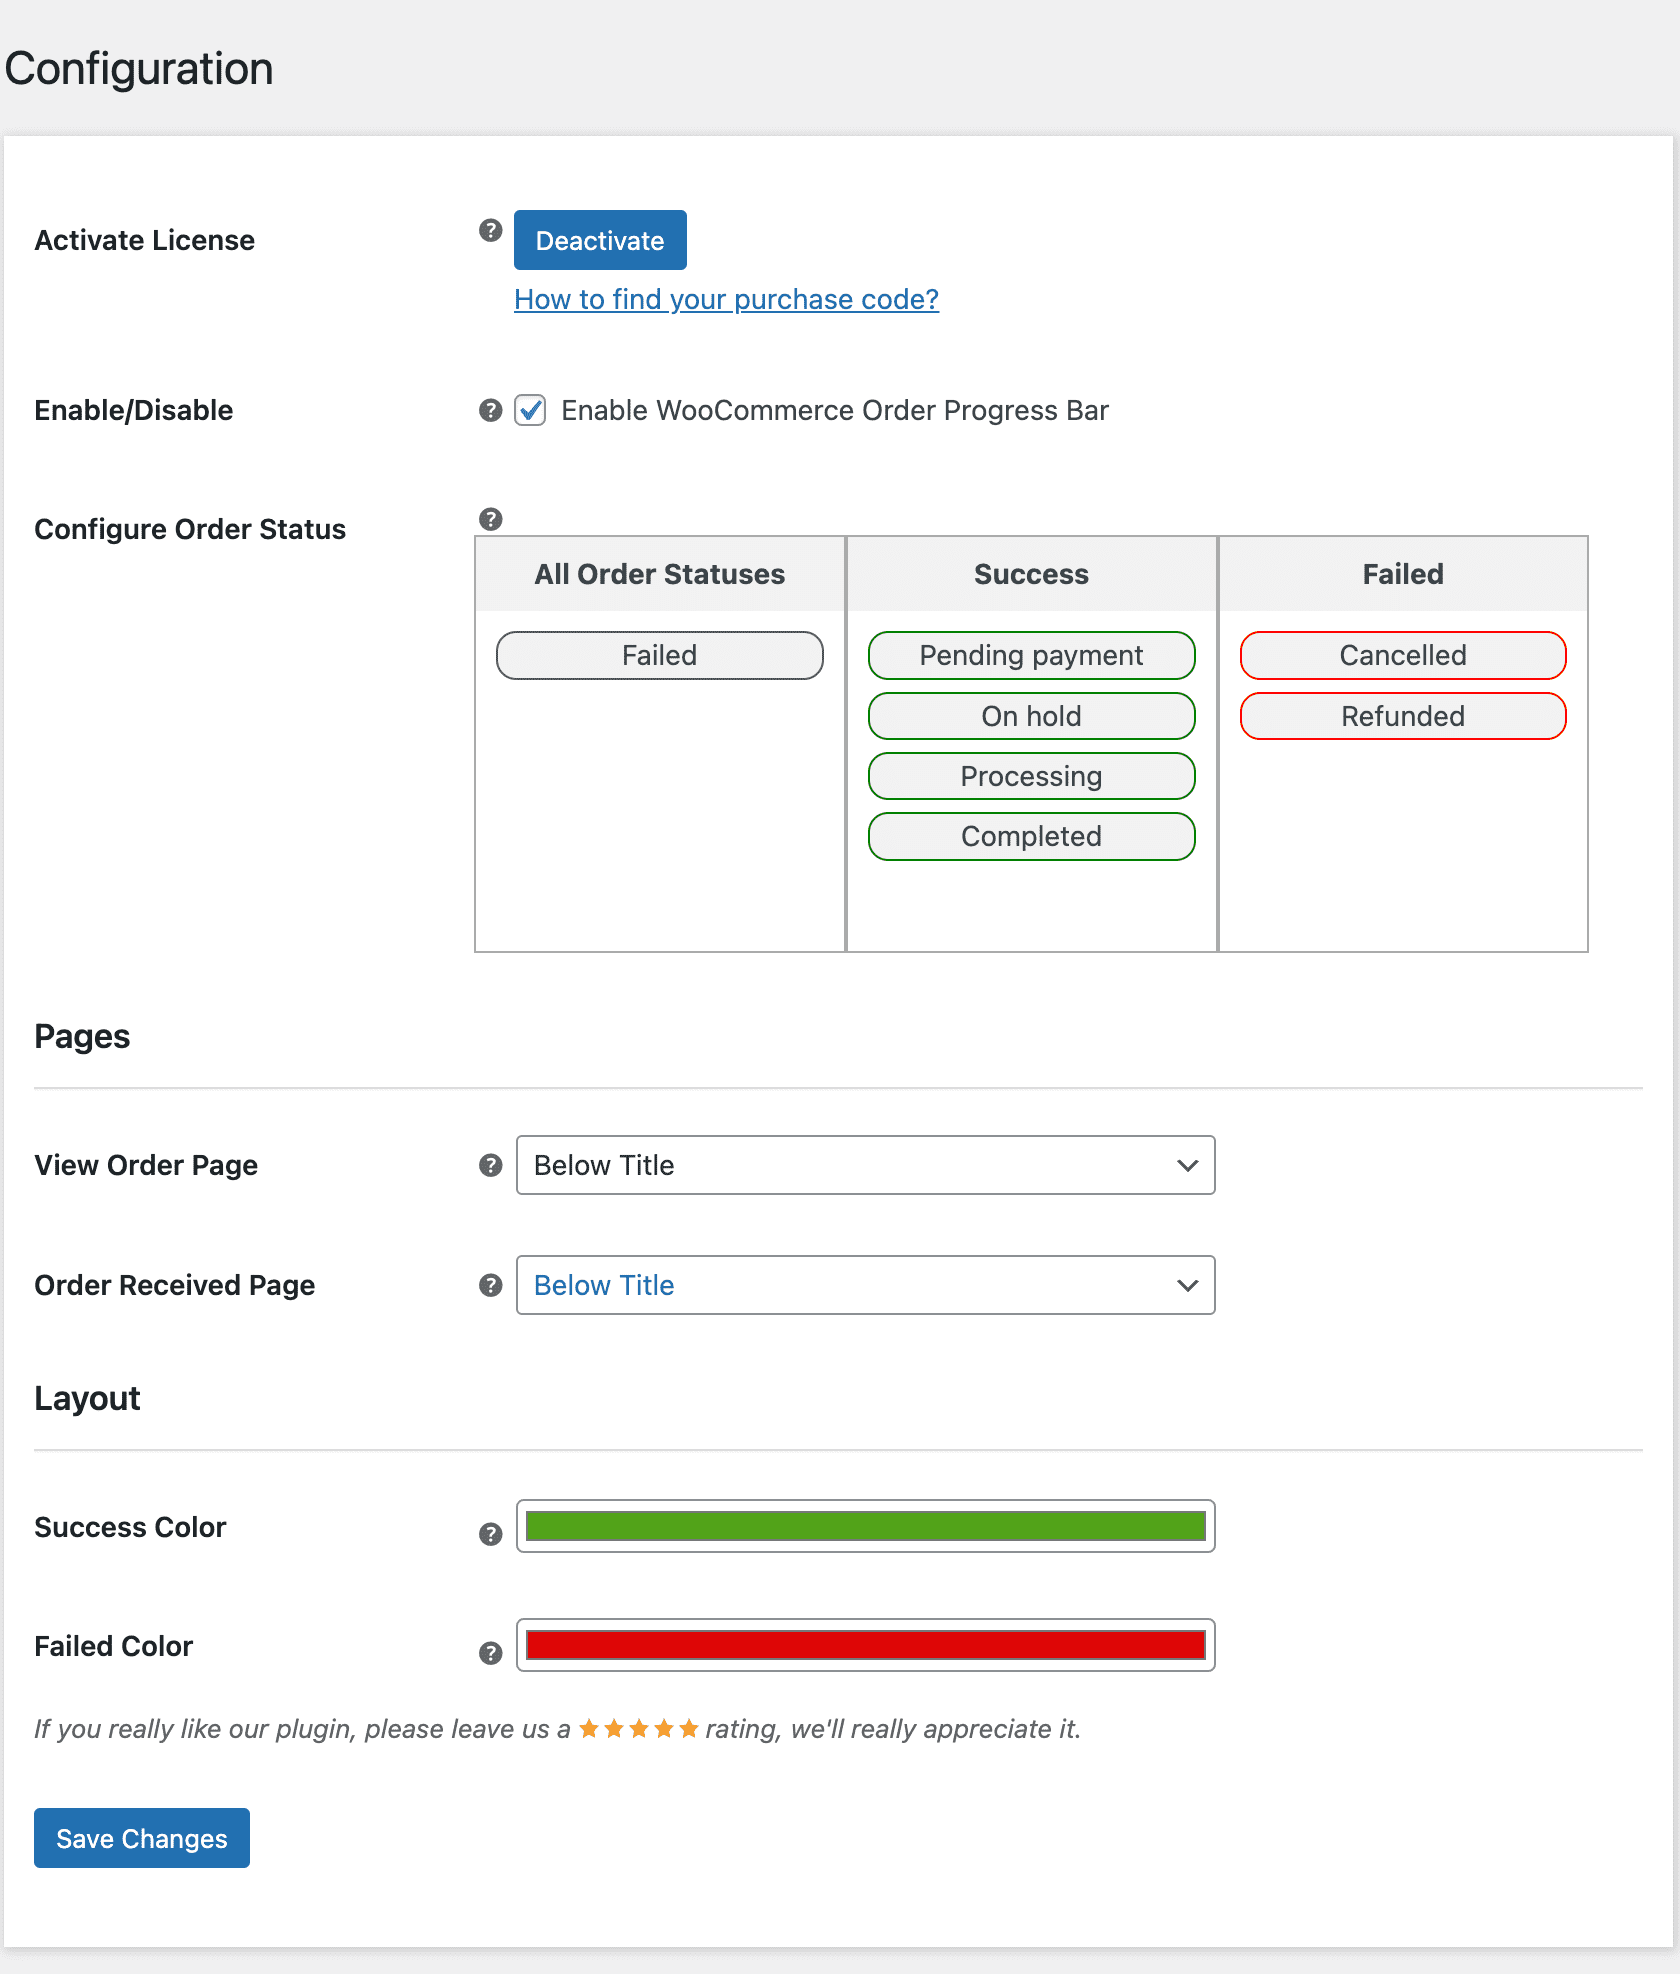 WooCommerce Order Progress Bar configuration page